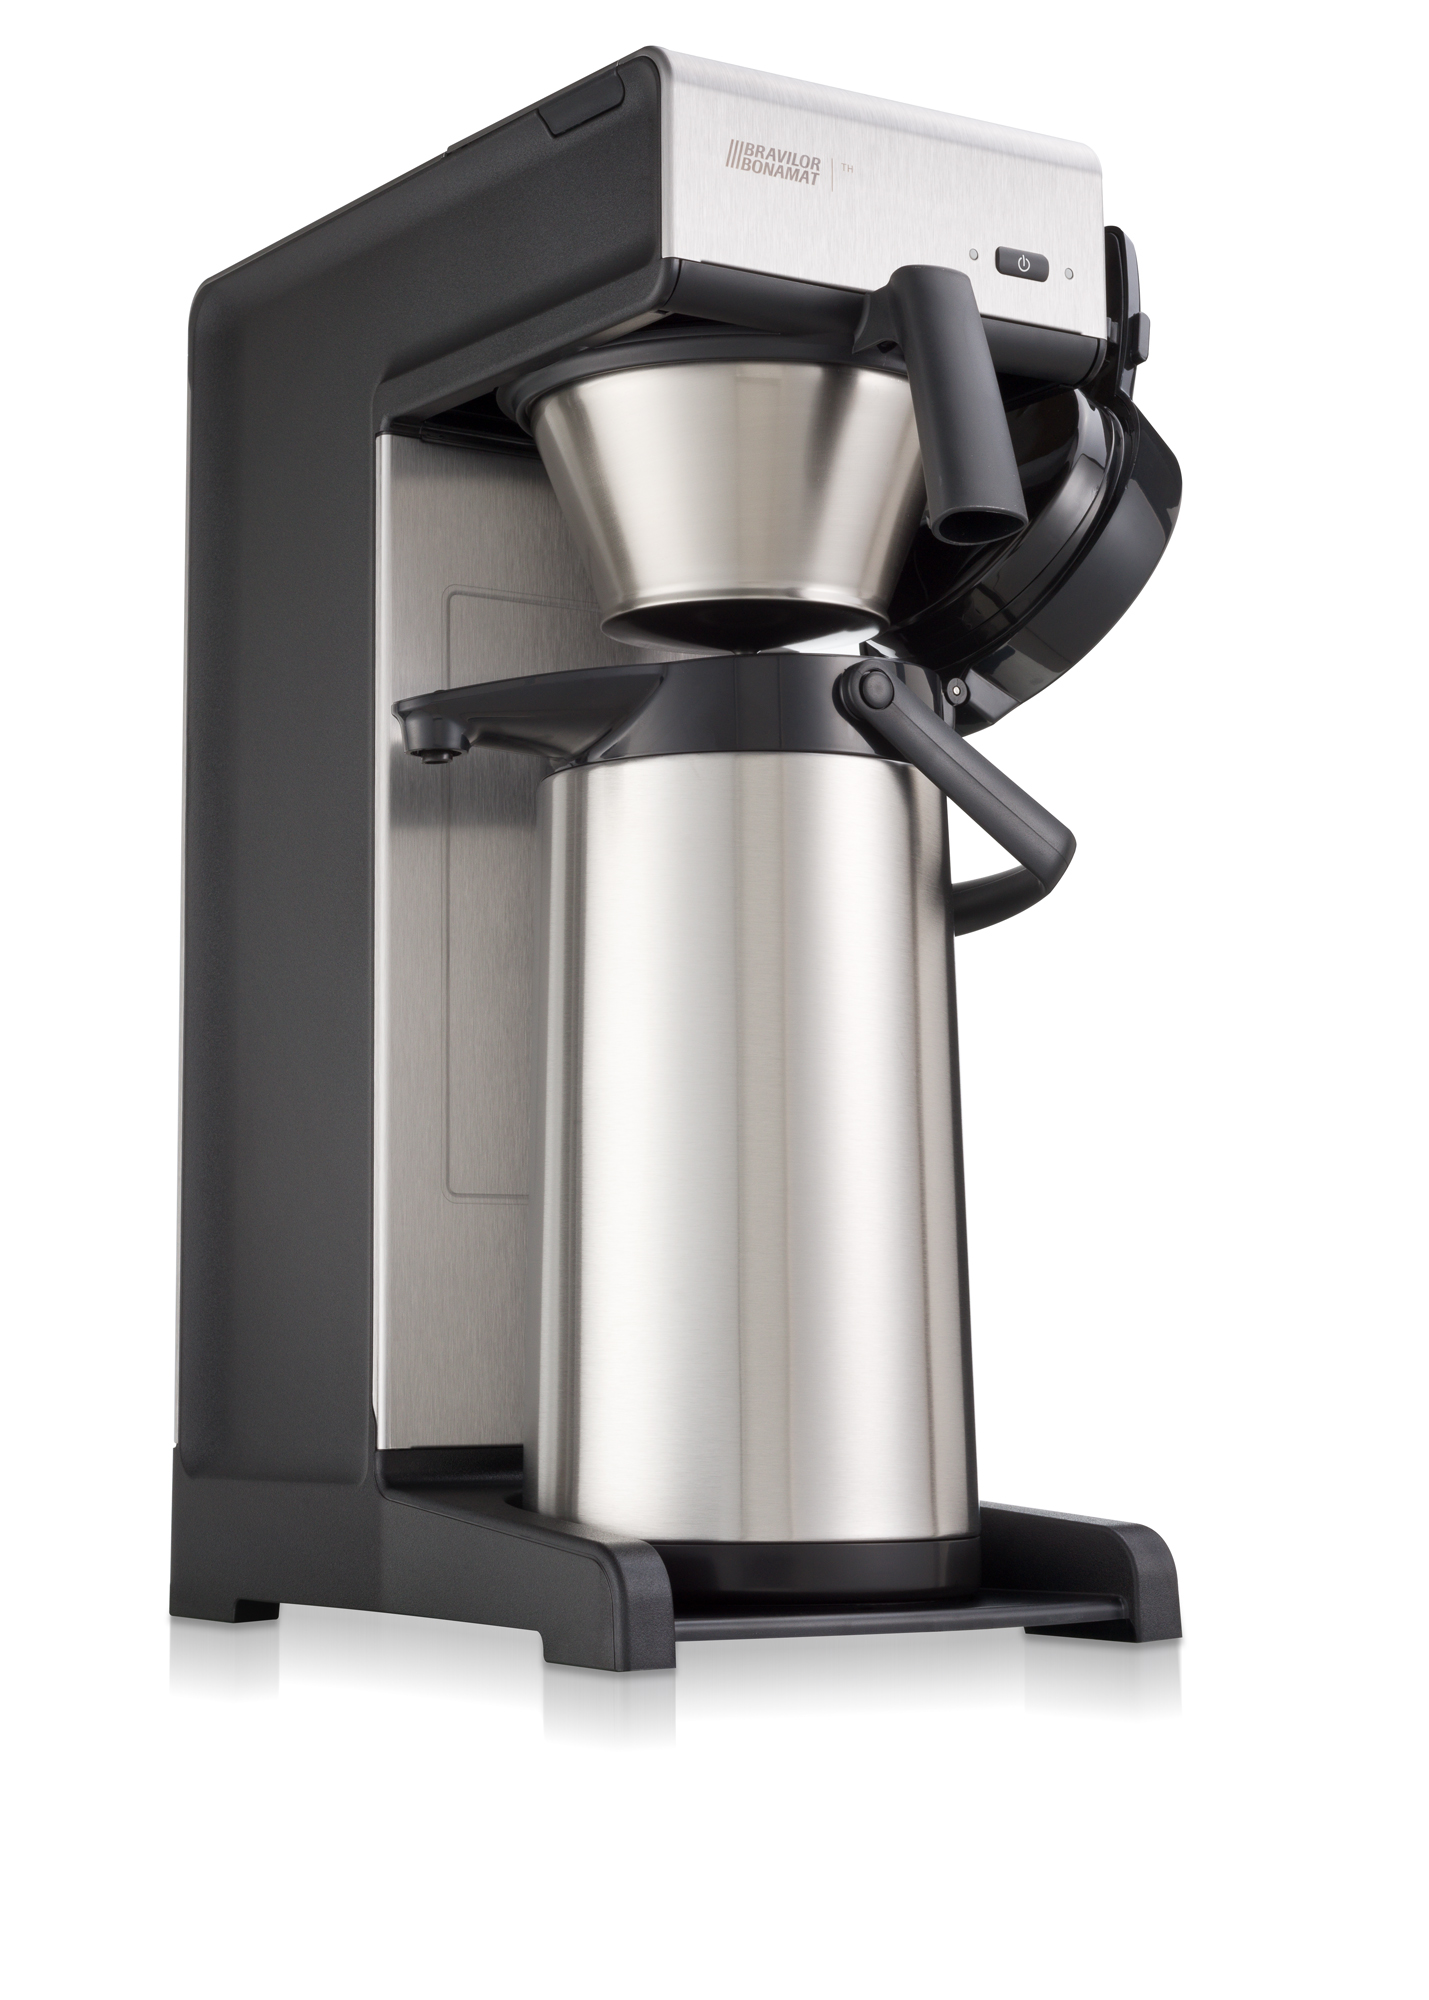 20 ravilor Bonamat Durchlauferhitzer für Kaffeemaschinen 220 V 2500W THA  10 